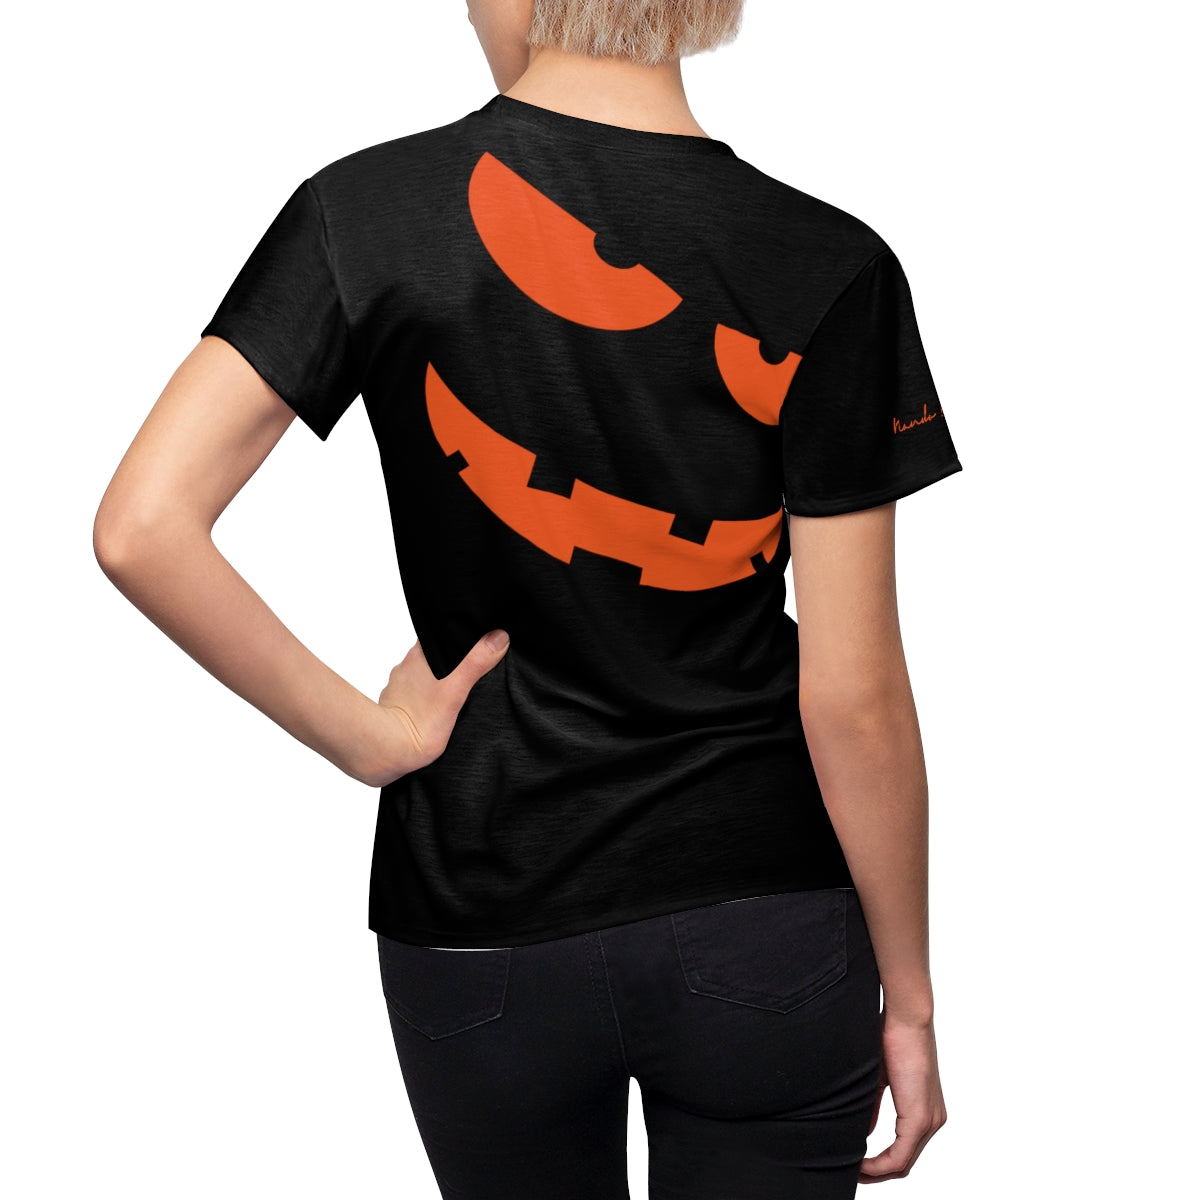 T-Shirt, Black Spooky Smile Motive